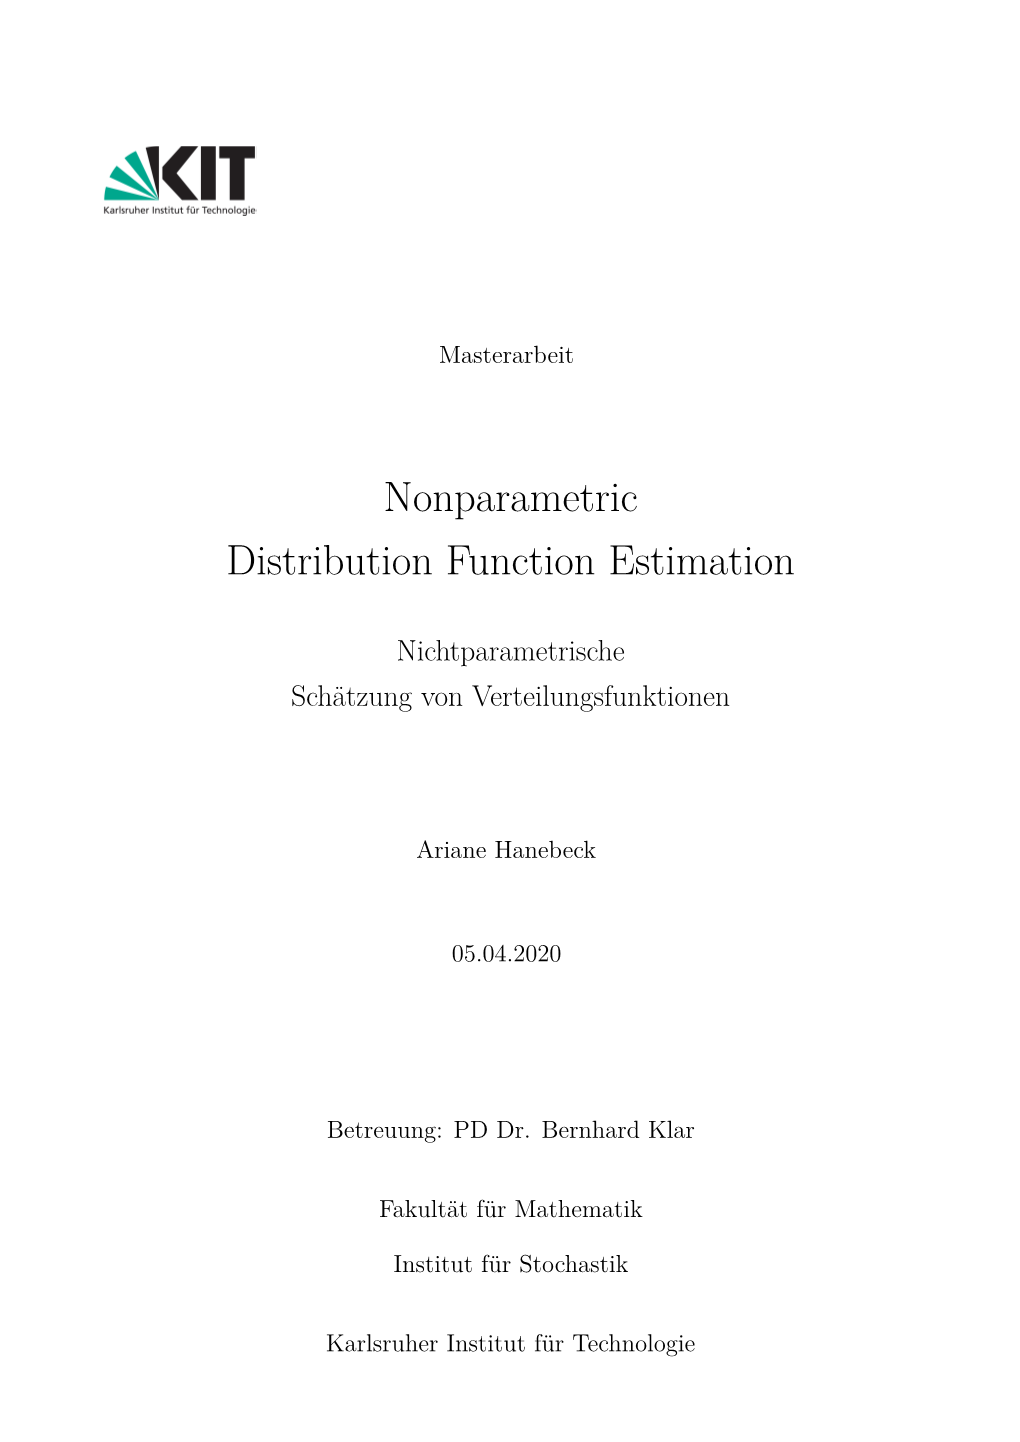 Nonparametric Distribution Function Estimation